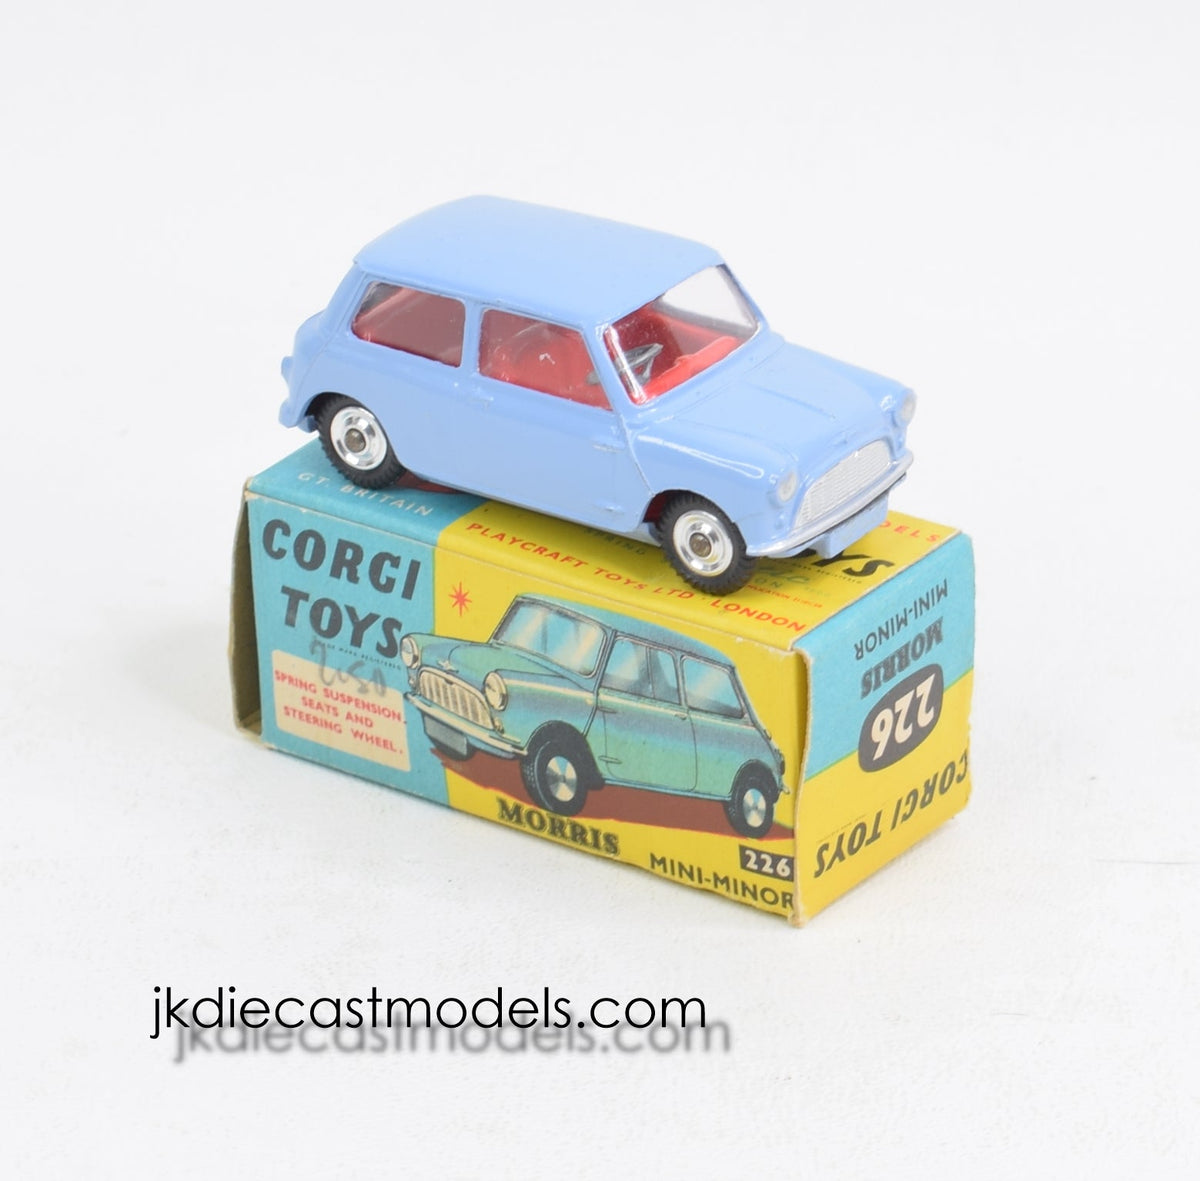 Corgi Toys 226 Mini Minor Virtually Mint/Boxed (Light blue) 'Avonmore Collection'